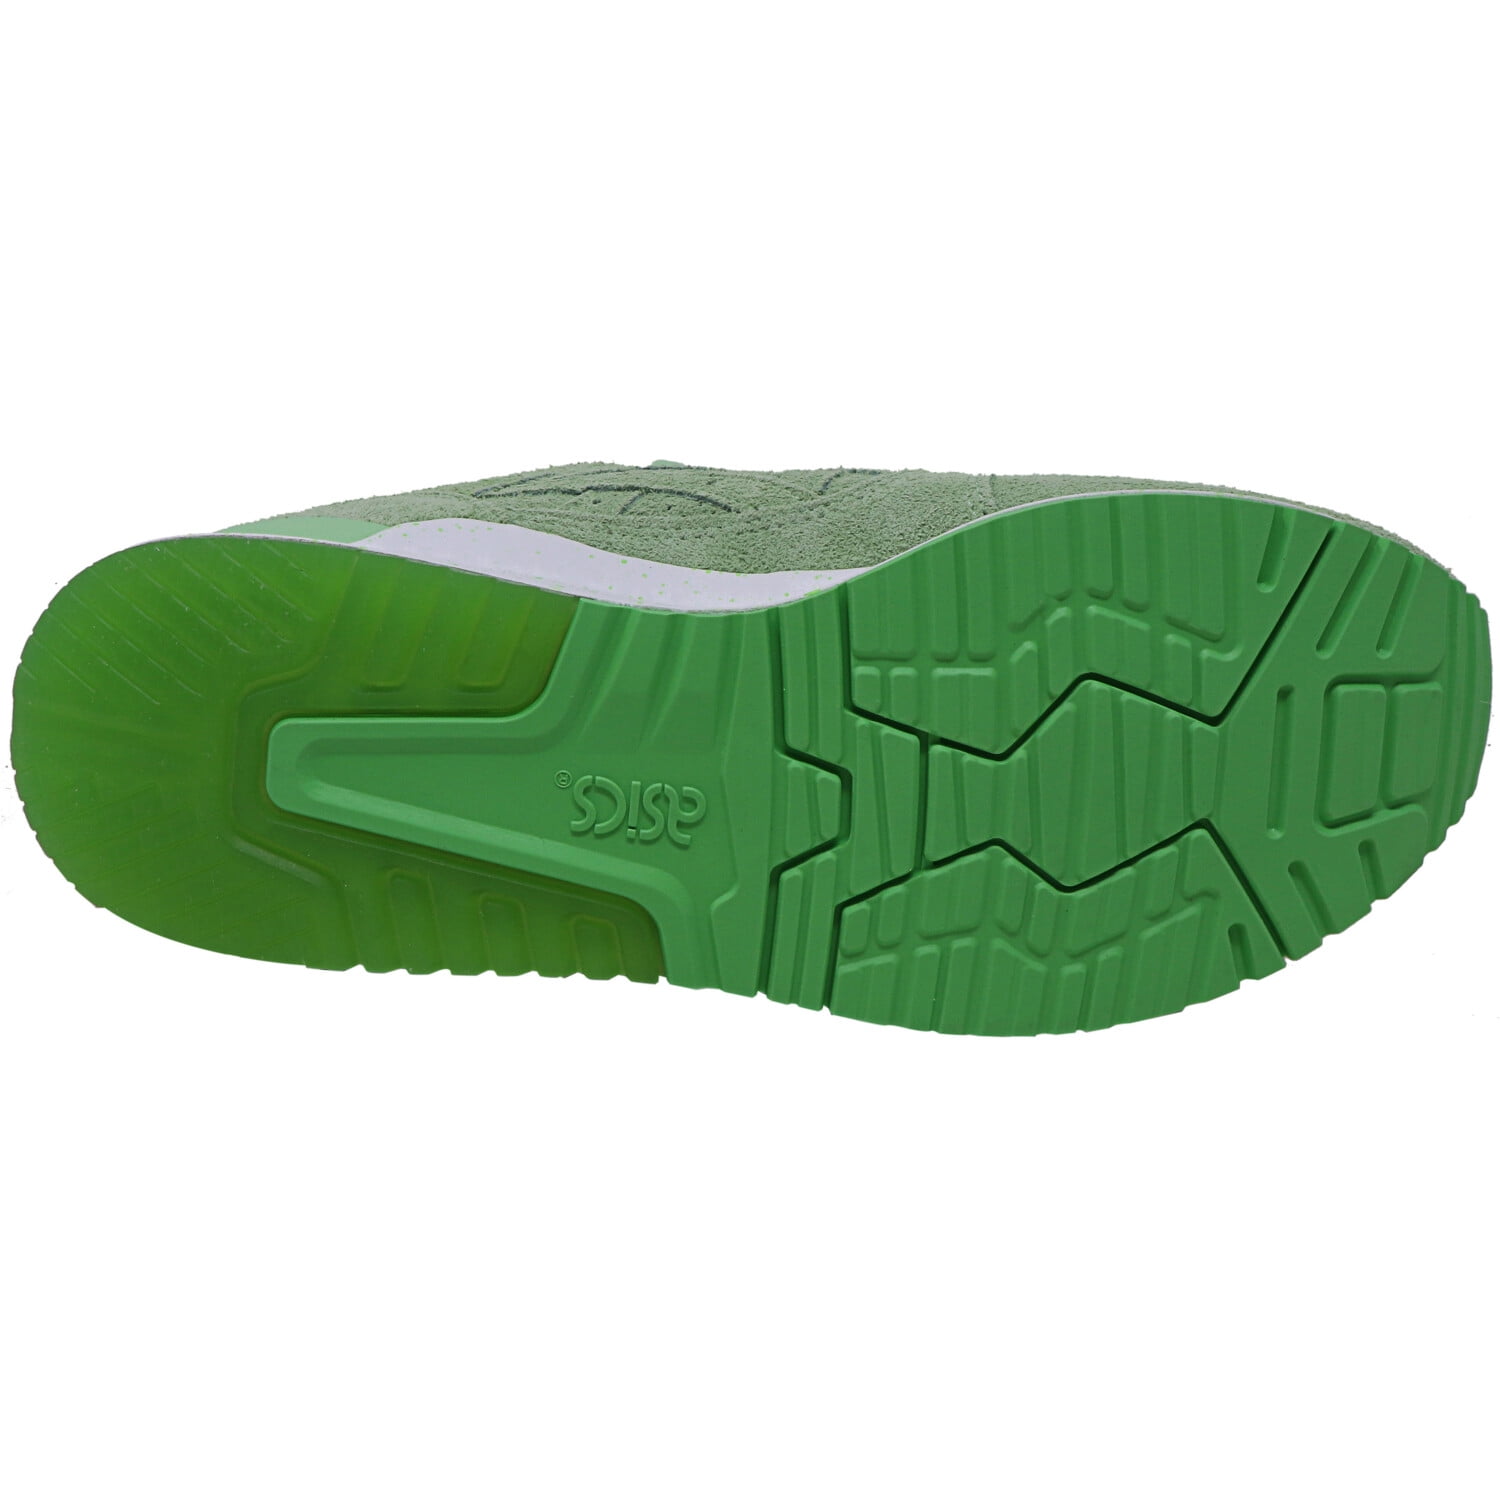 Tiger Iii Patina Green / Sneaker - 9M - Walmart.com